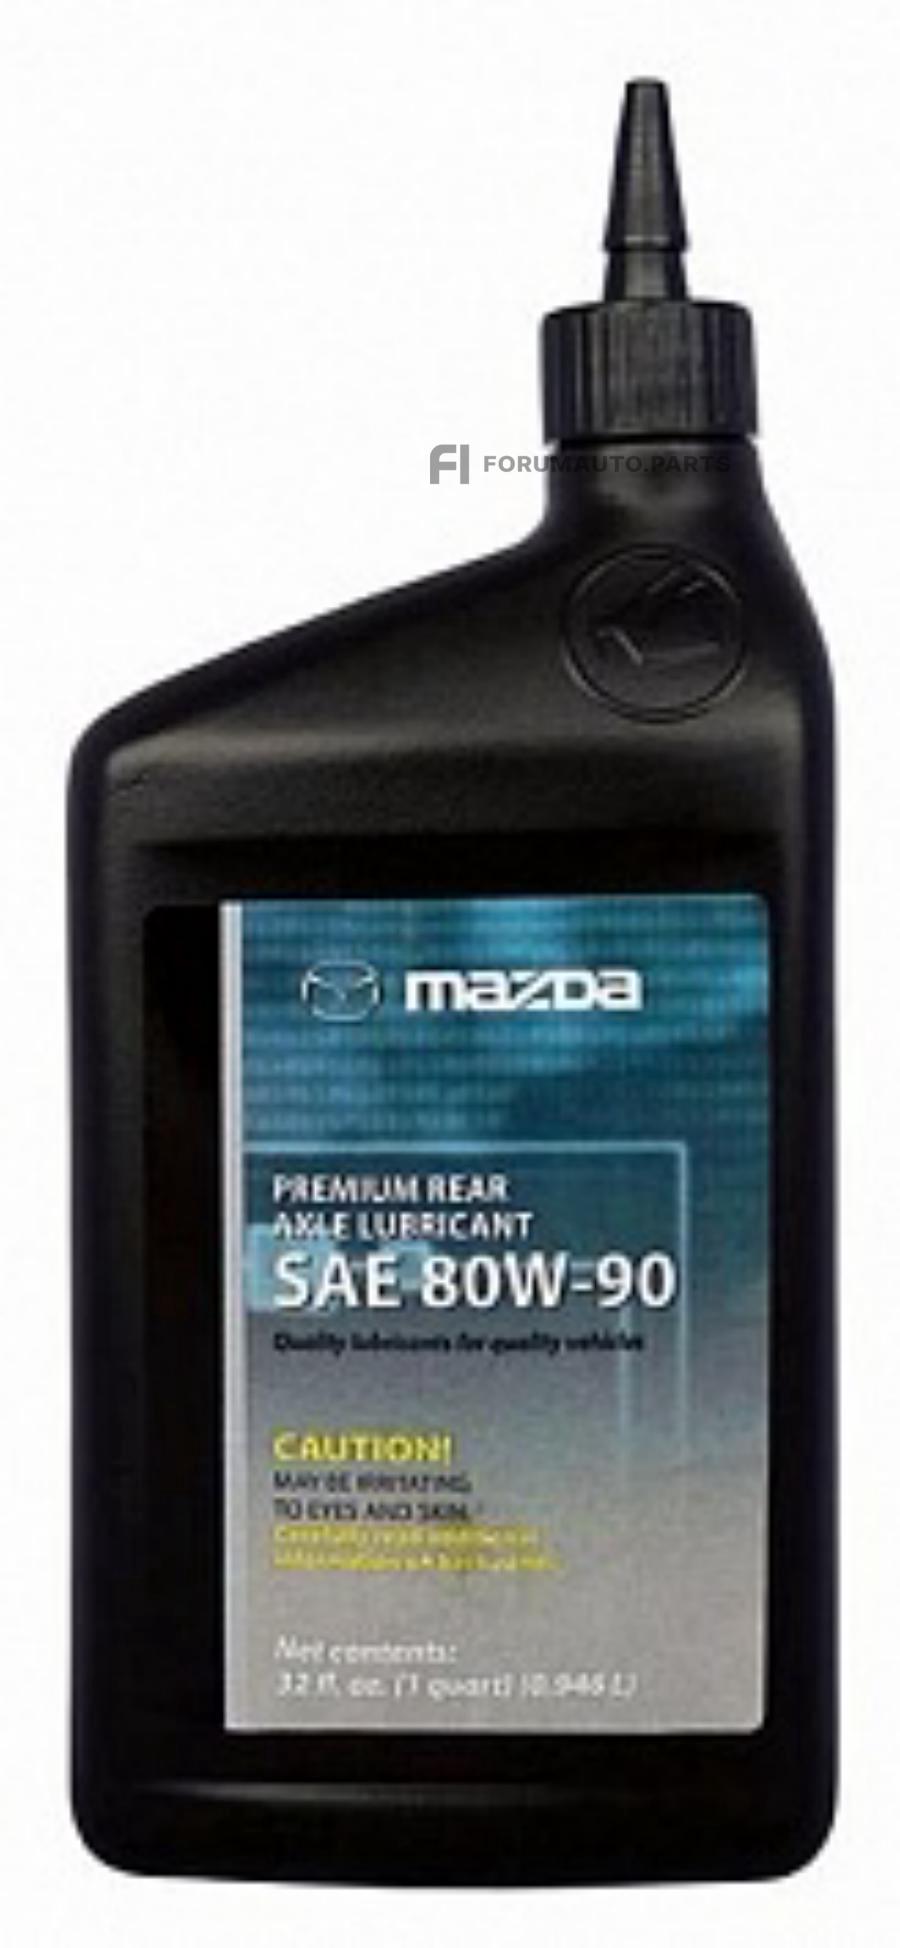 00007780W9QT MAZDA Масло трансмиссионное "Rear Differential Oil 80W-90", 1л